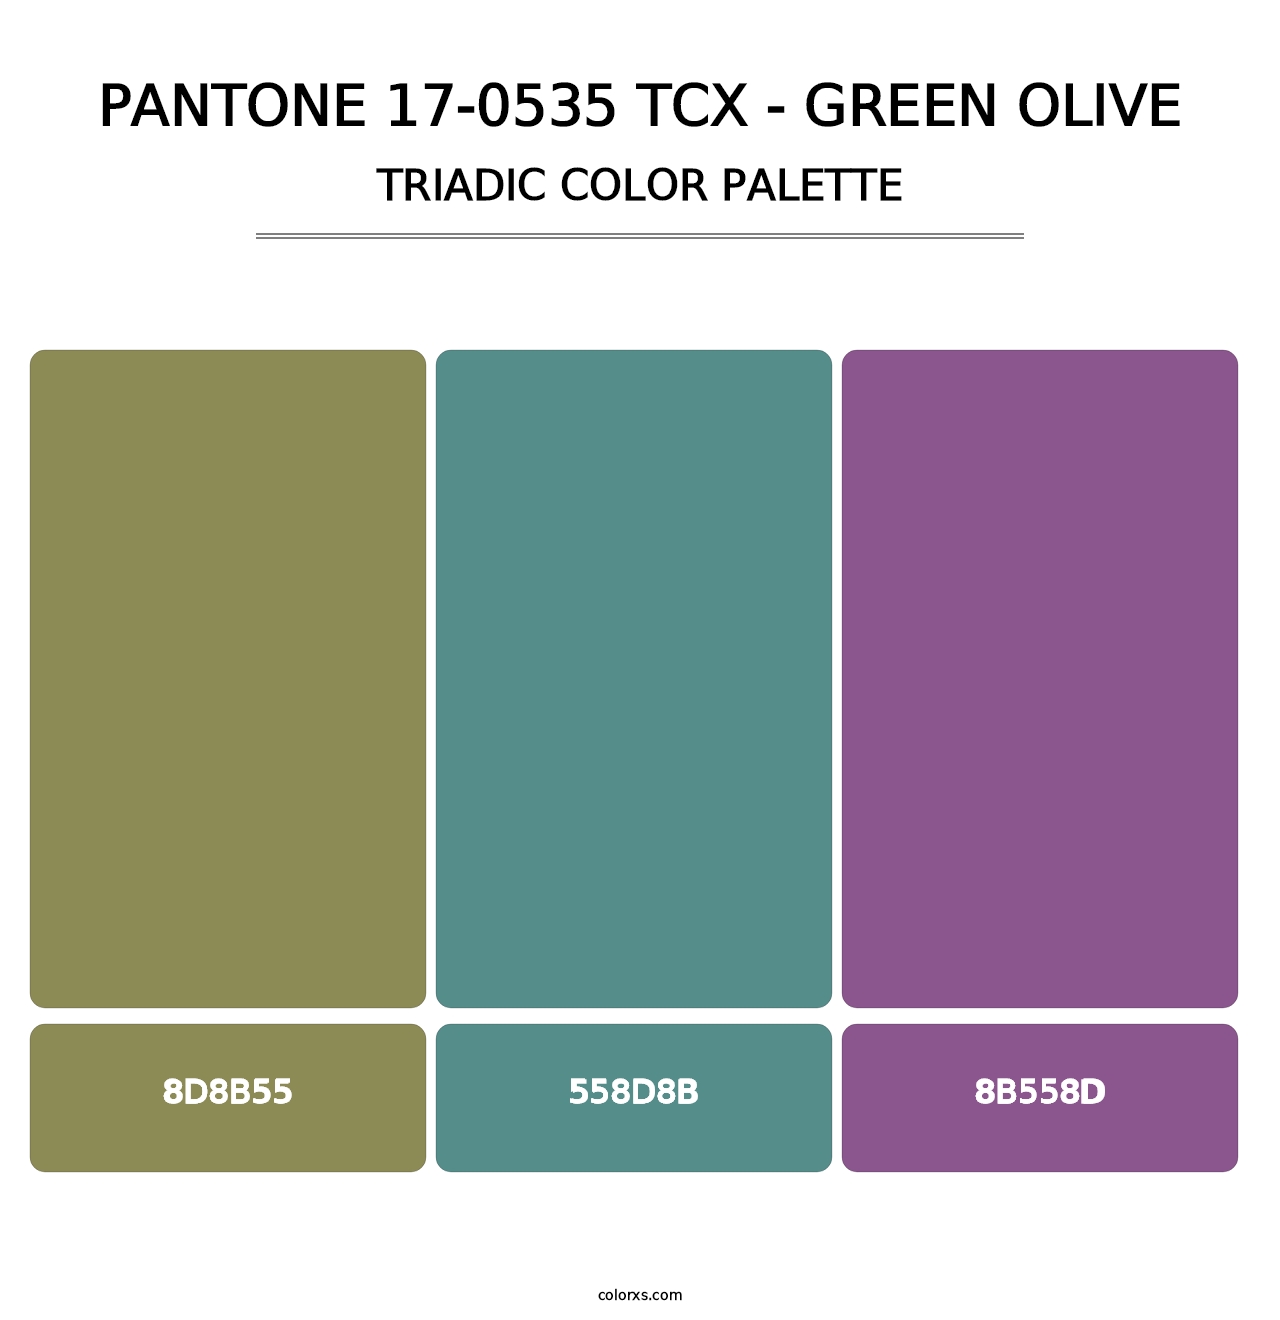 PANTONE 17-0535 TCX - Green Olive - Triadic Color Palette